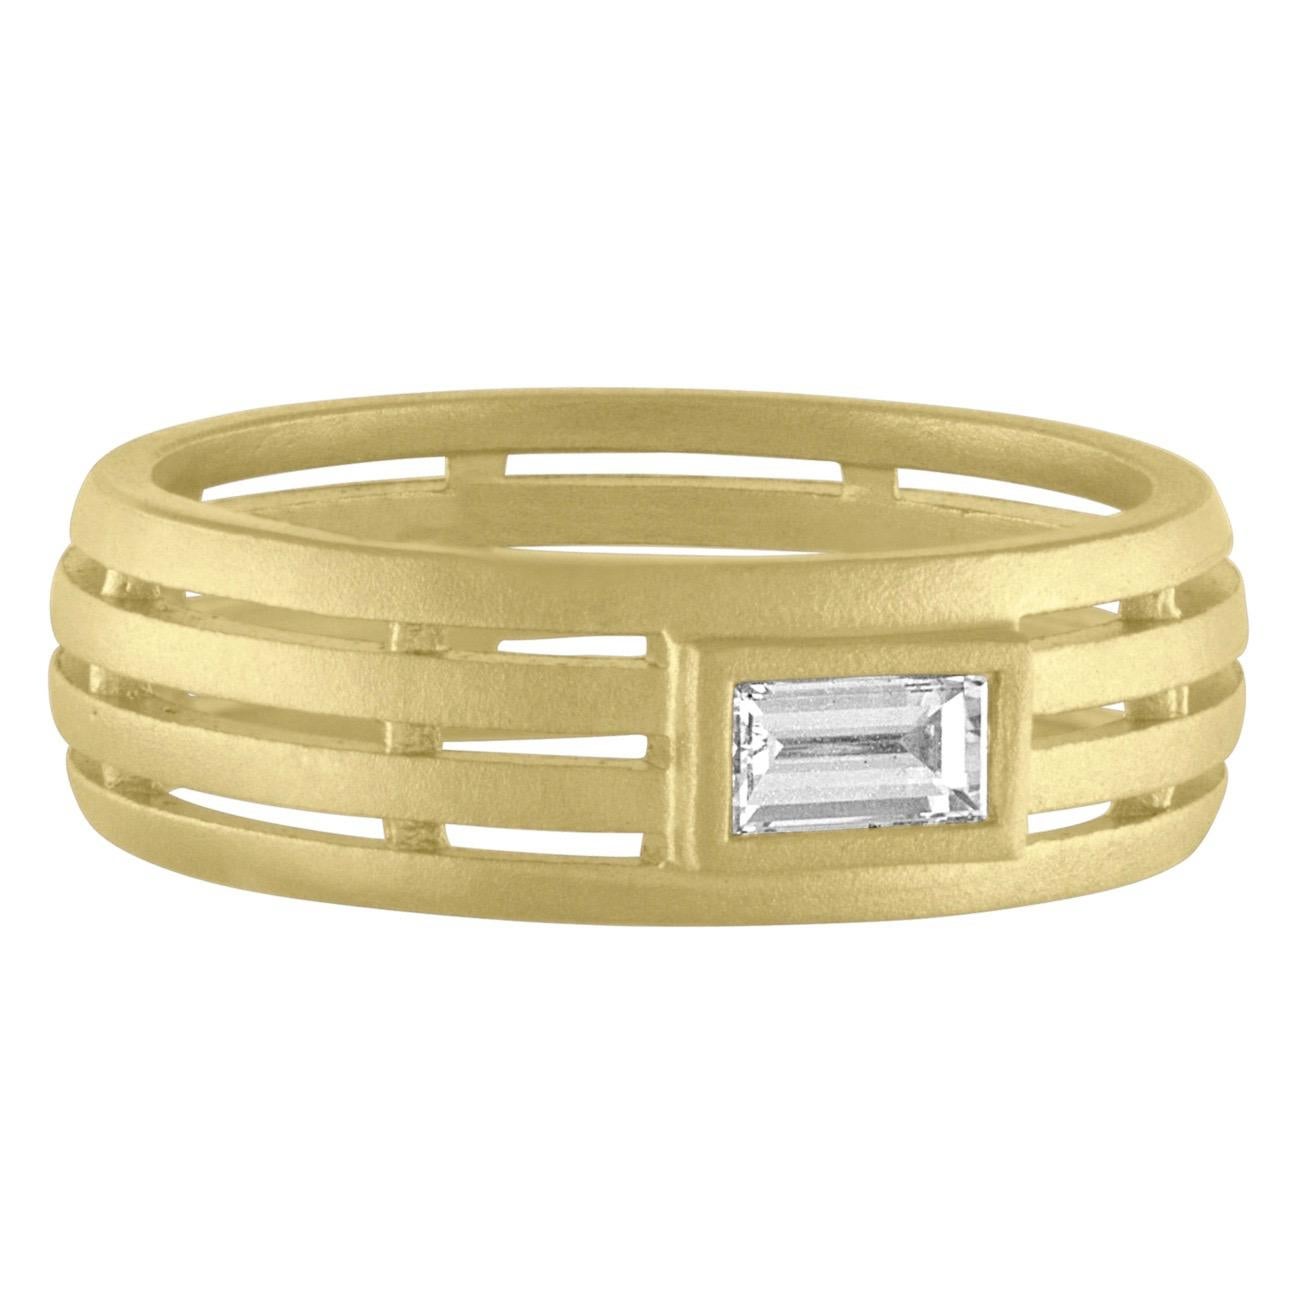 18K Green Gold Baguette Diamond Ring
Diamond weight .23 
Size 5 3/4